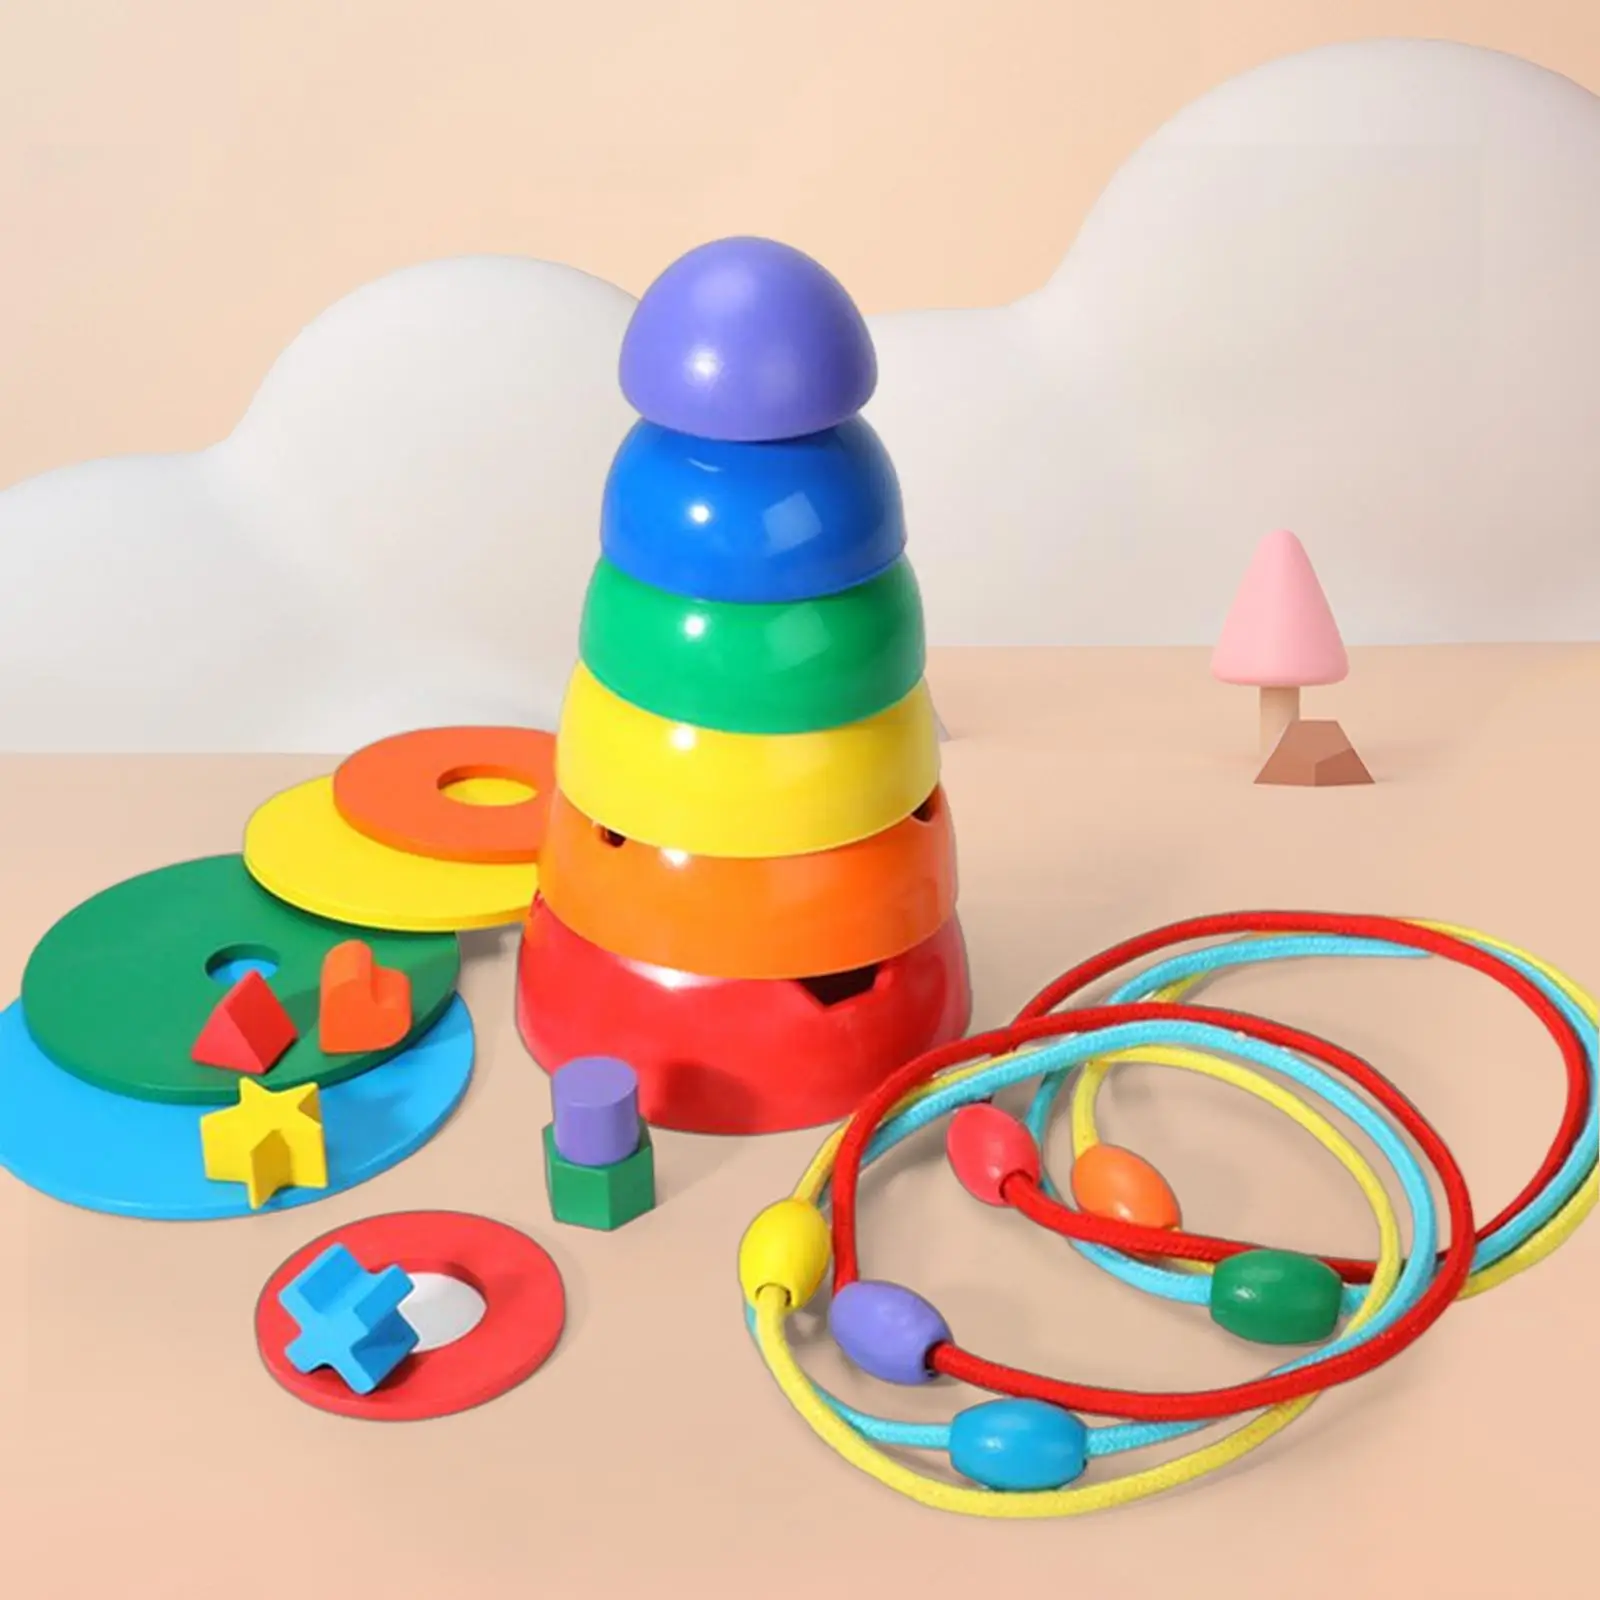 Montessori Colorful Stacking Blocks color Sorting Preschool Development Toy for Toddler Babies Children Birthday Gift